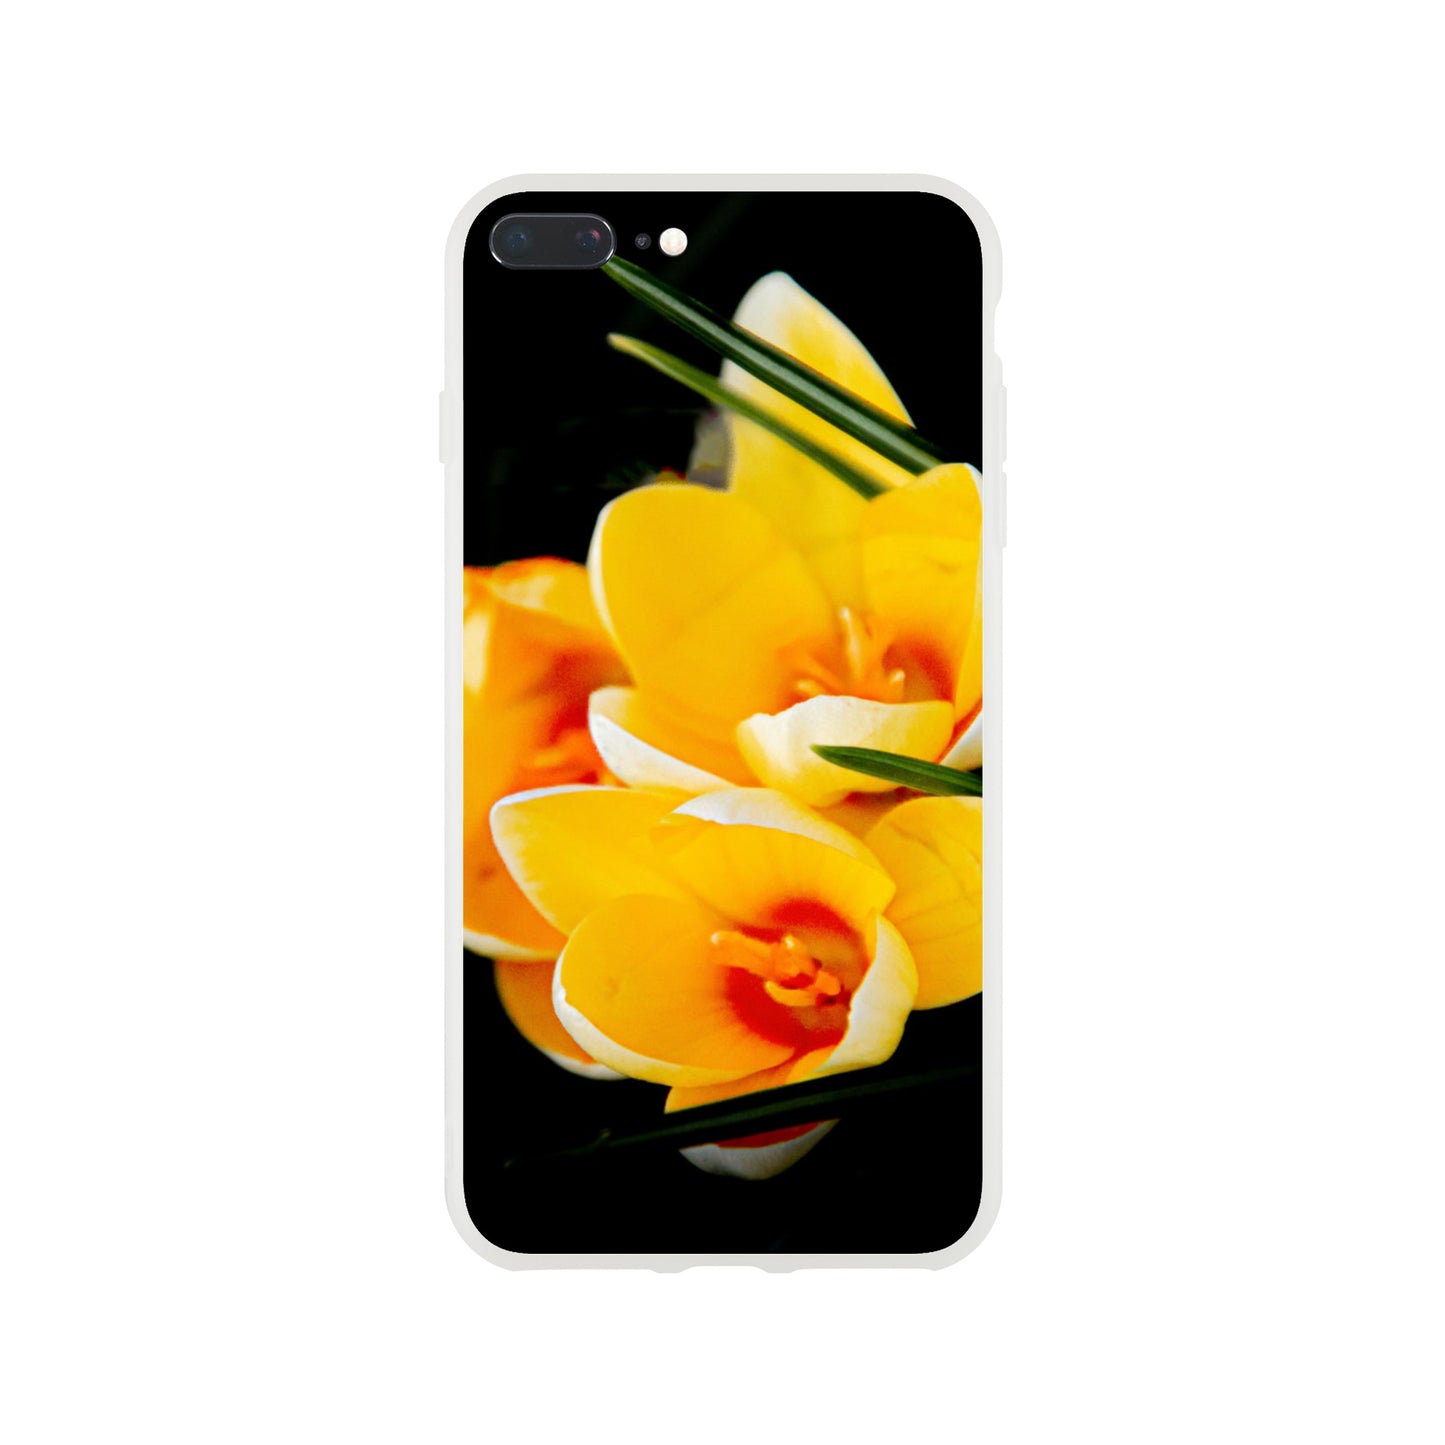 Spring Flower - Phone Case (Iphone / Samsung)